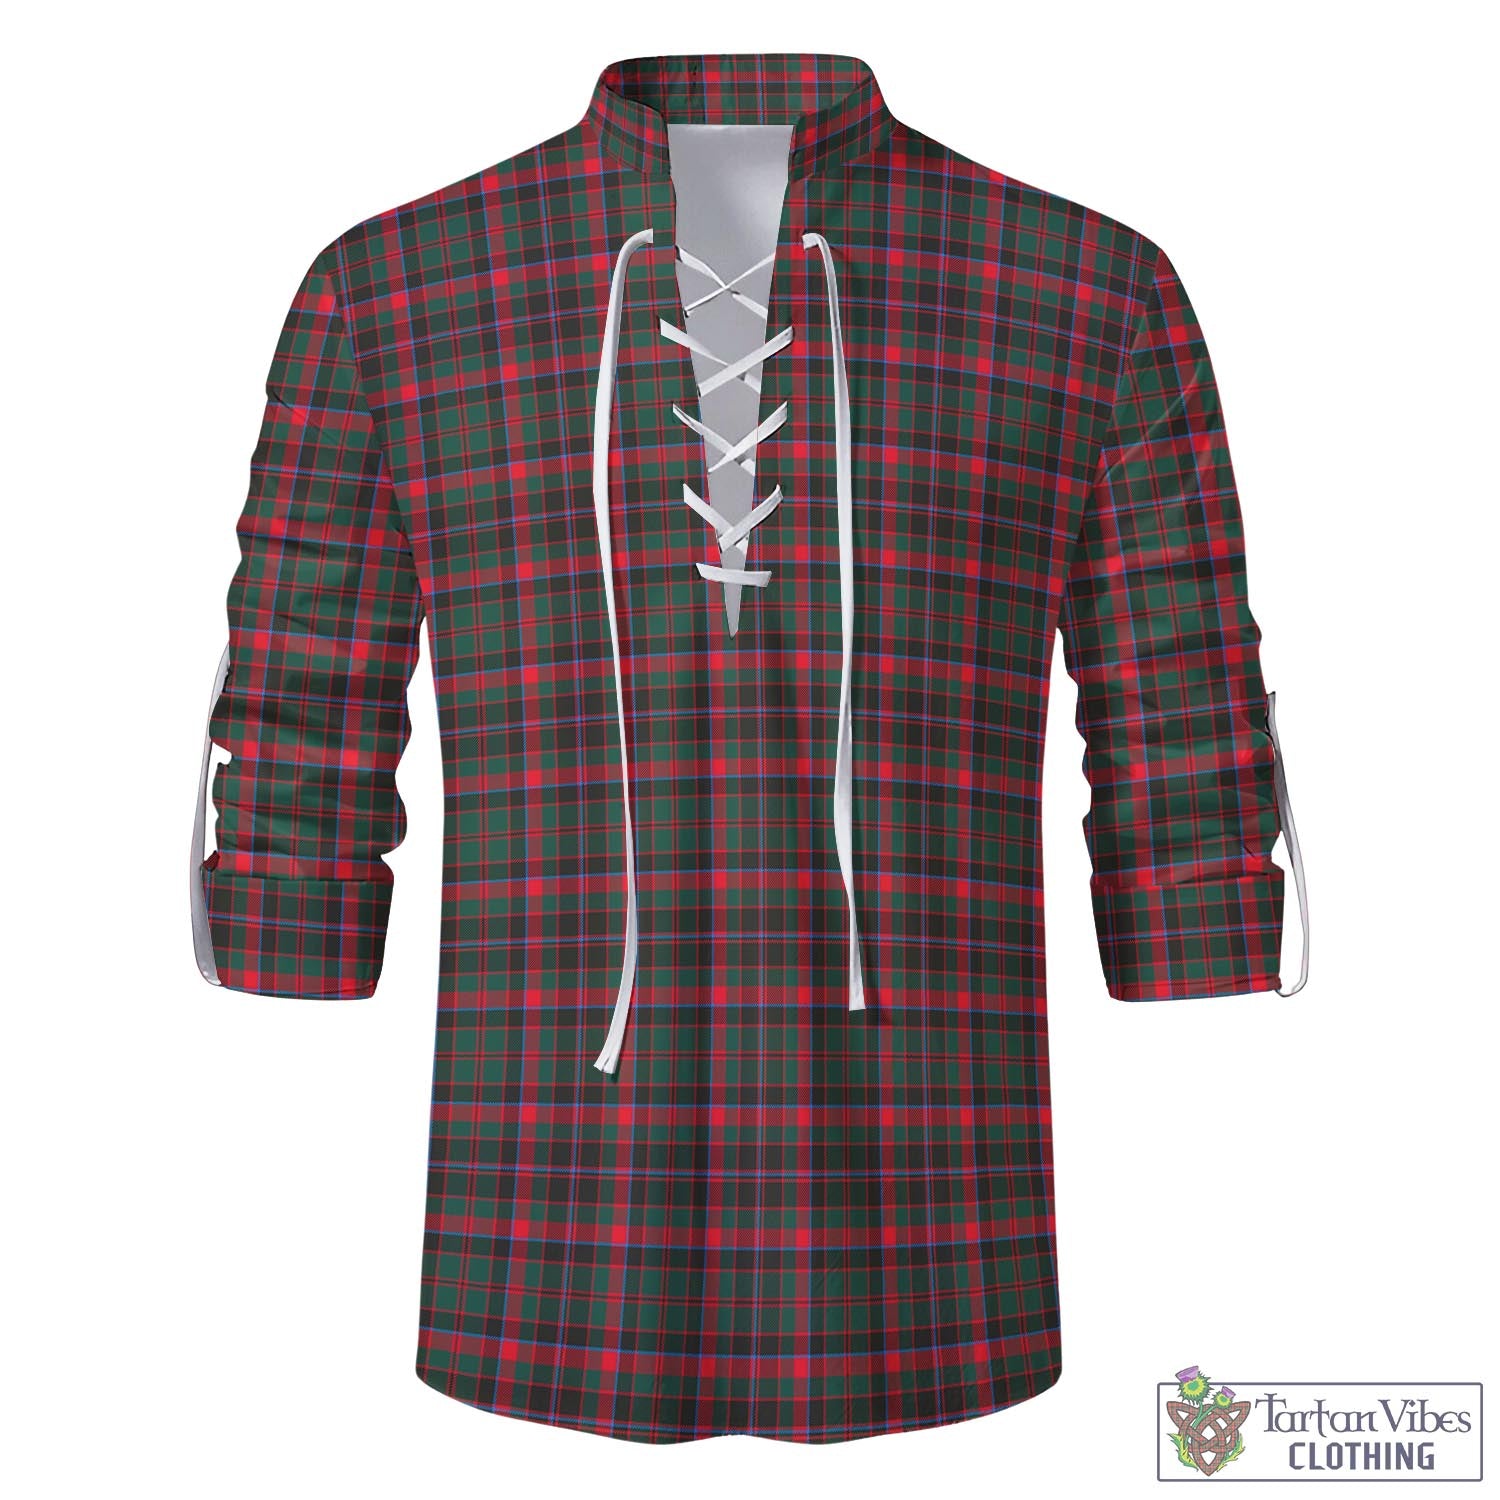 Tartan Vibes Clothing Cumming Hunting Modern Tartan Men's Scottish Traditional Jacobite Ghillie Kilt Shirt